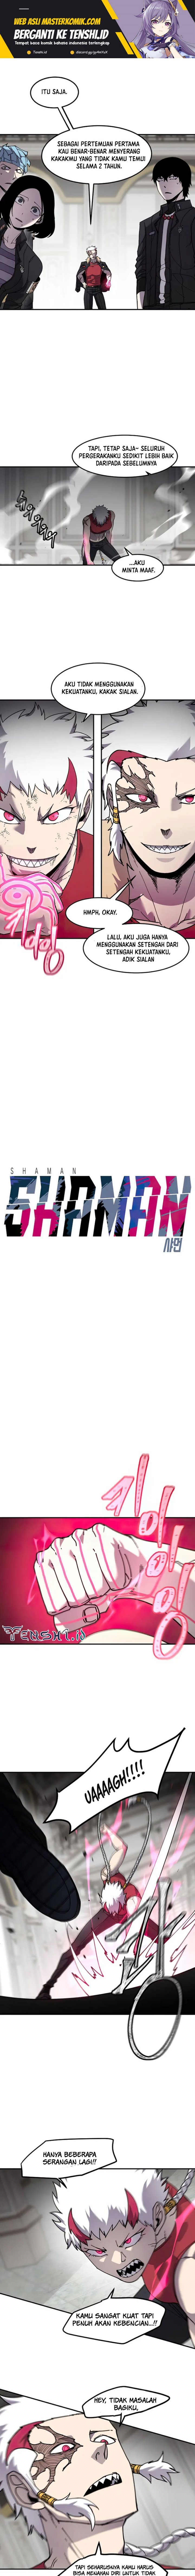 Shaman Chapter 79 - 75